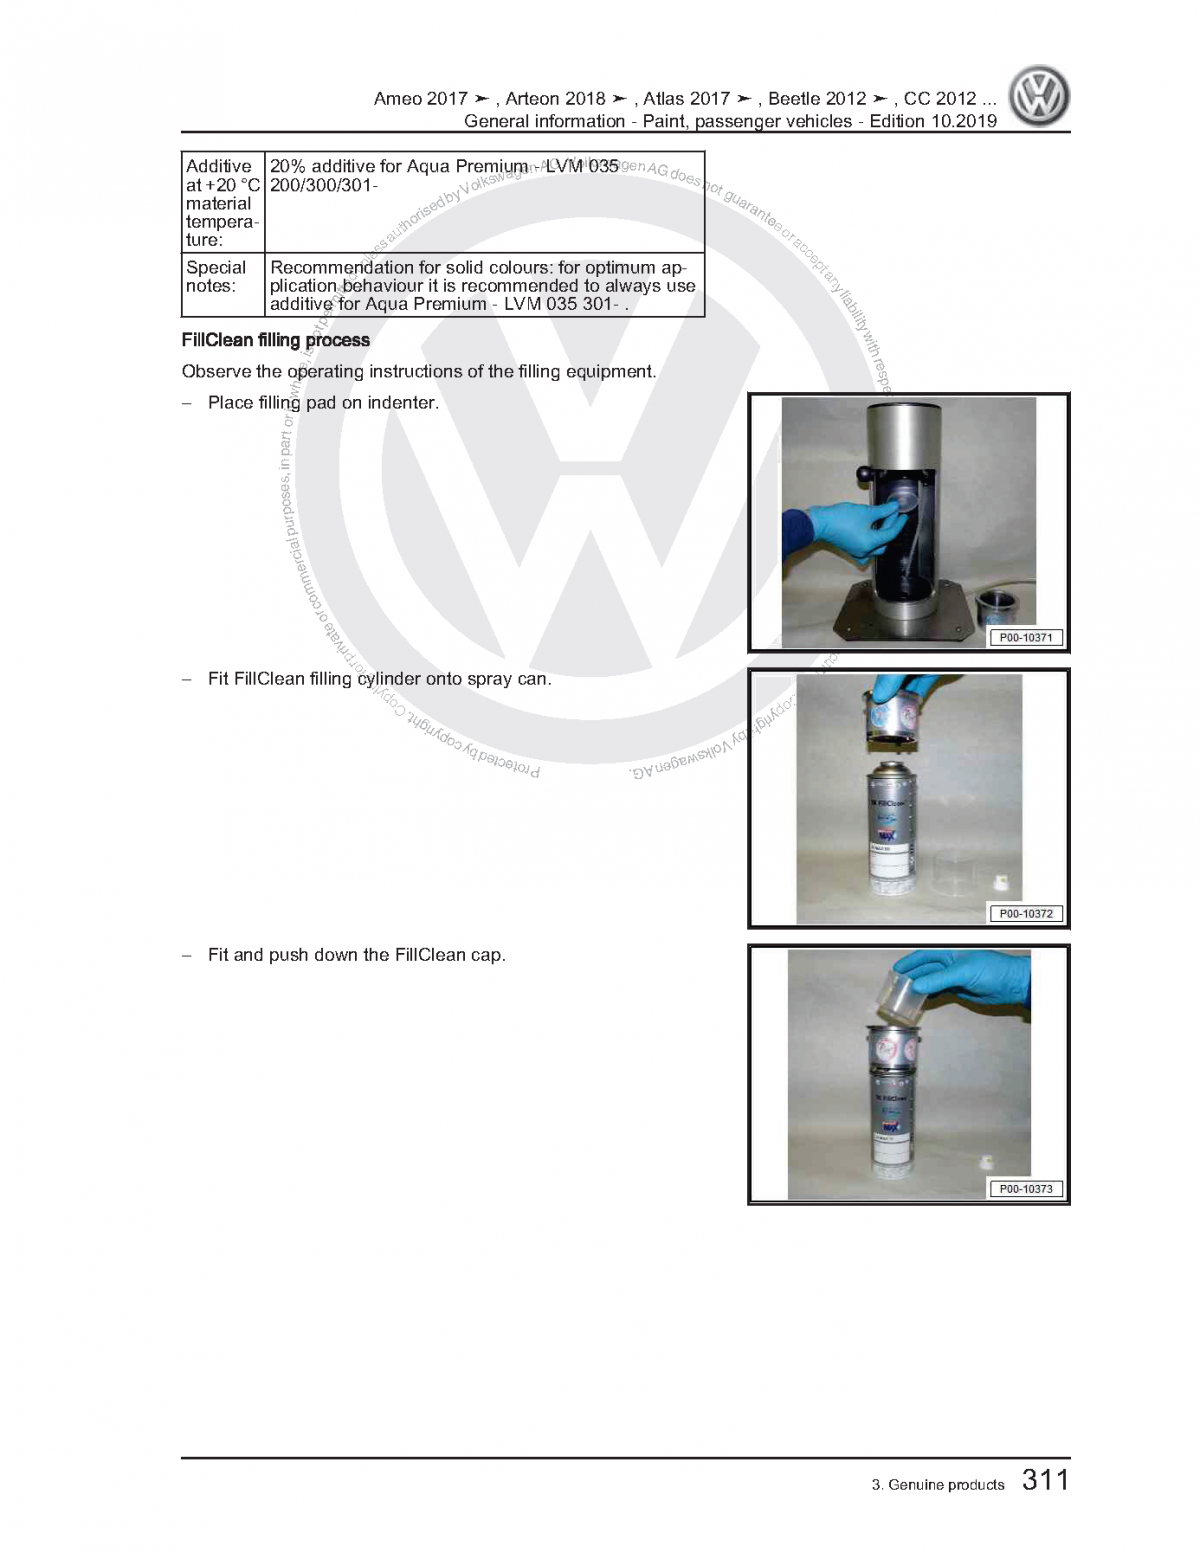 Volkswagen (VW) Paint Passenger Vehicles Workshop Manual